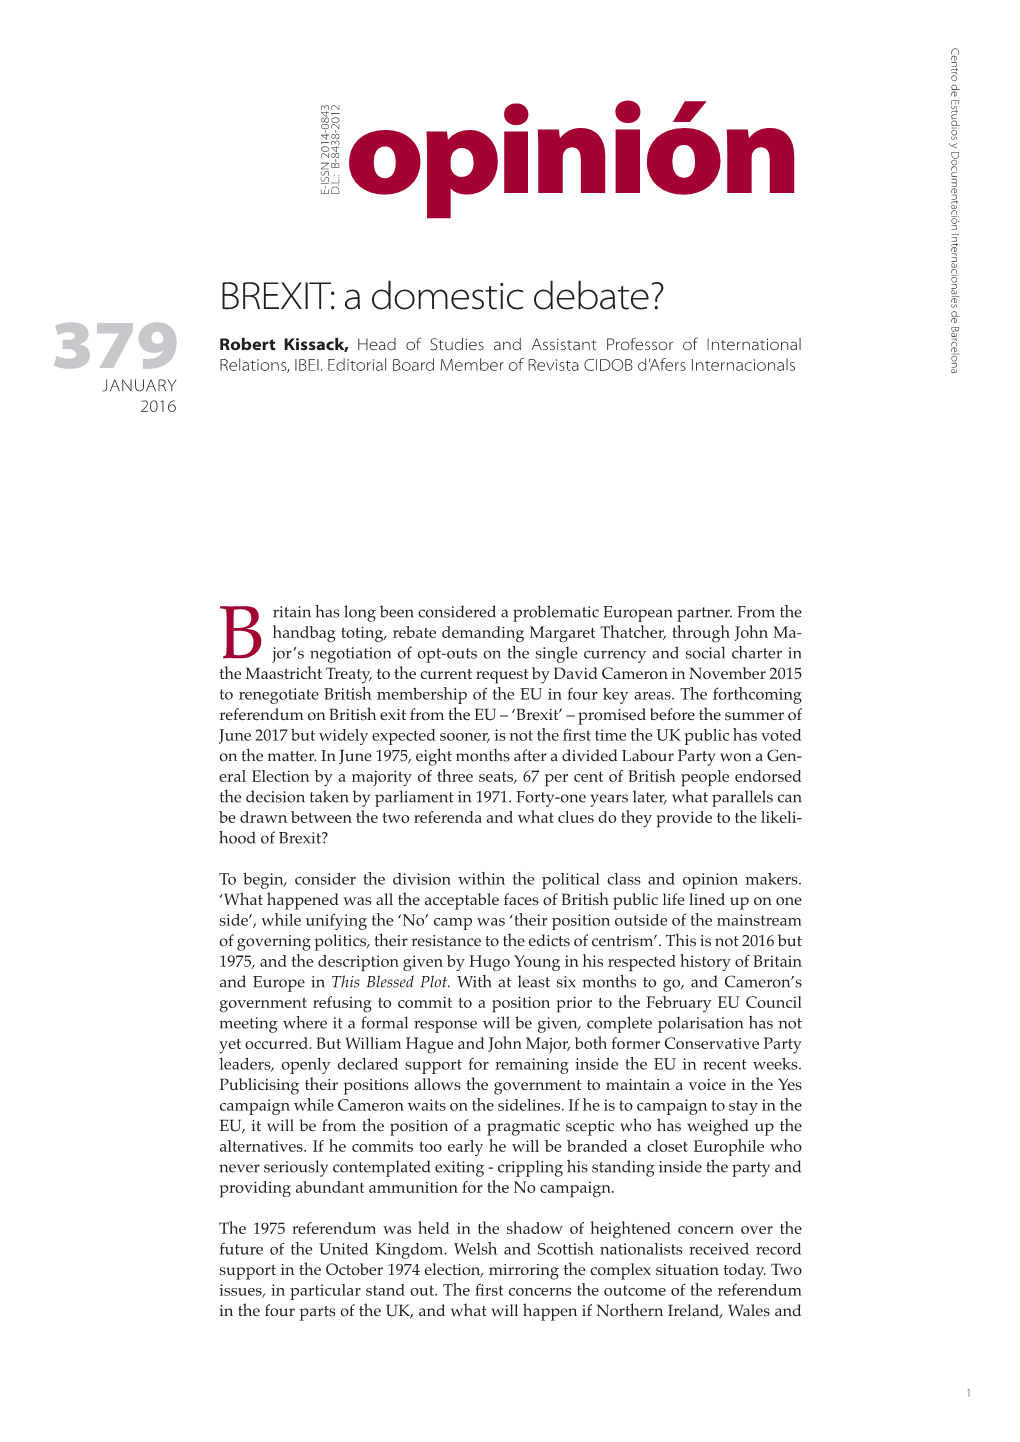 BREXIT: a Domestic Debate?